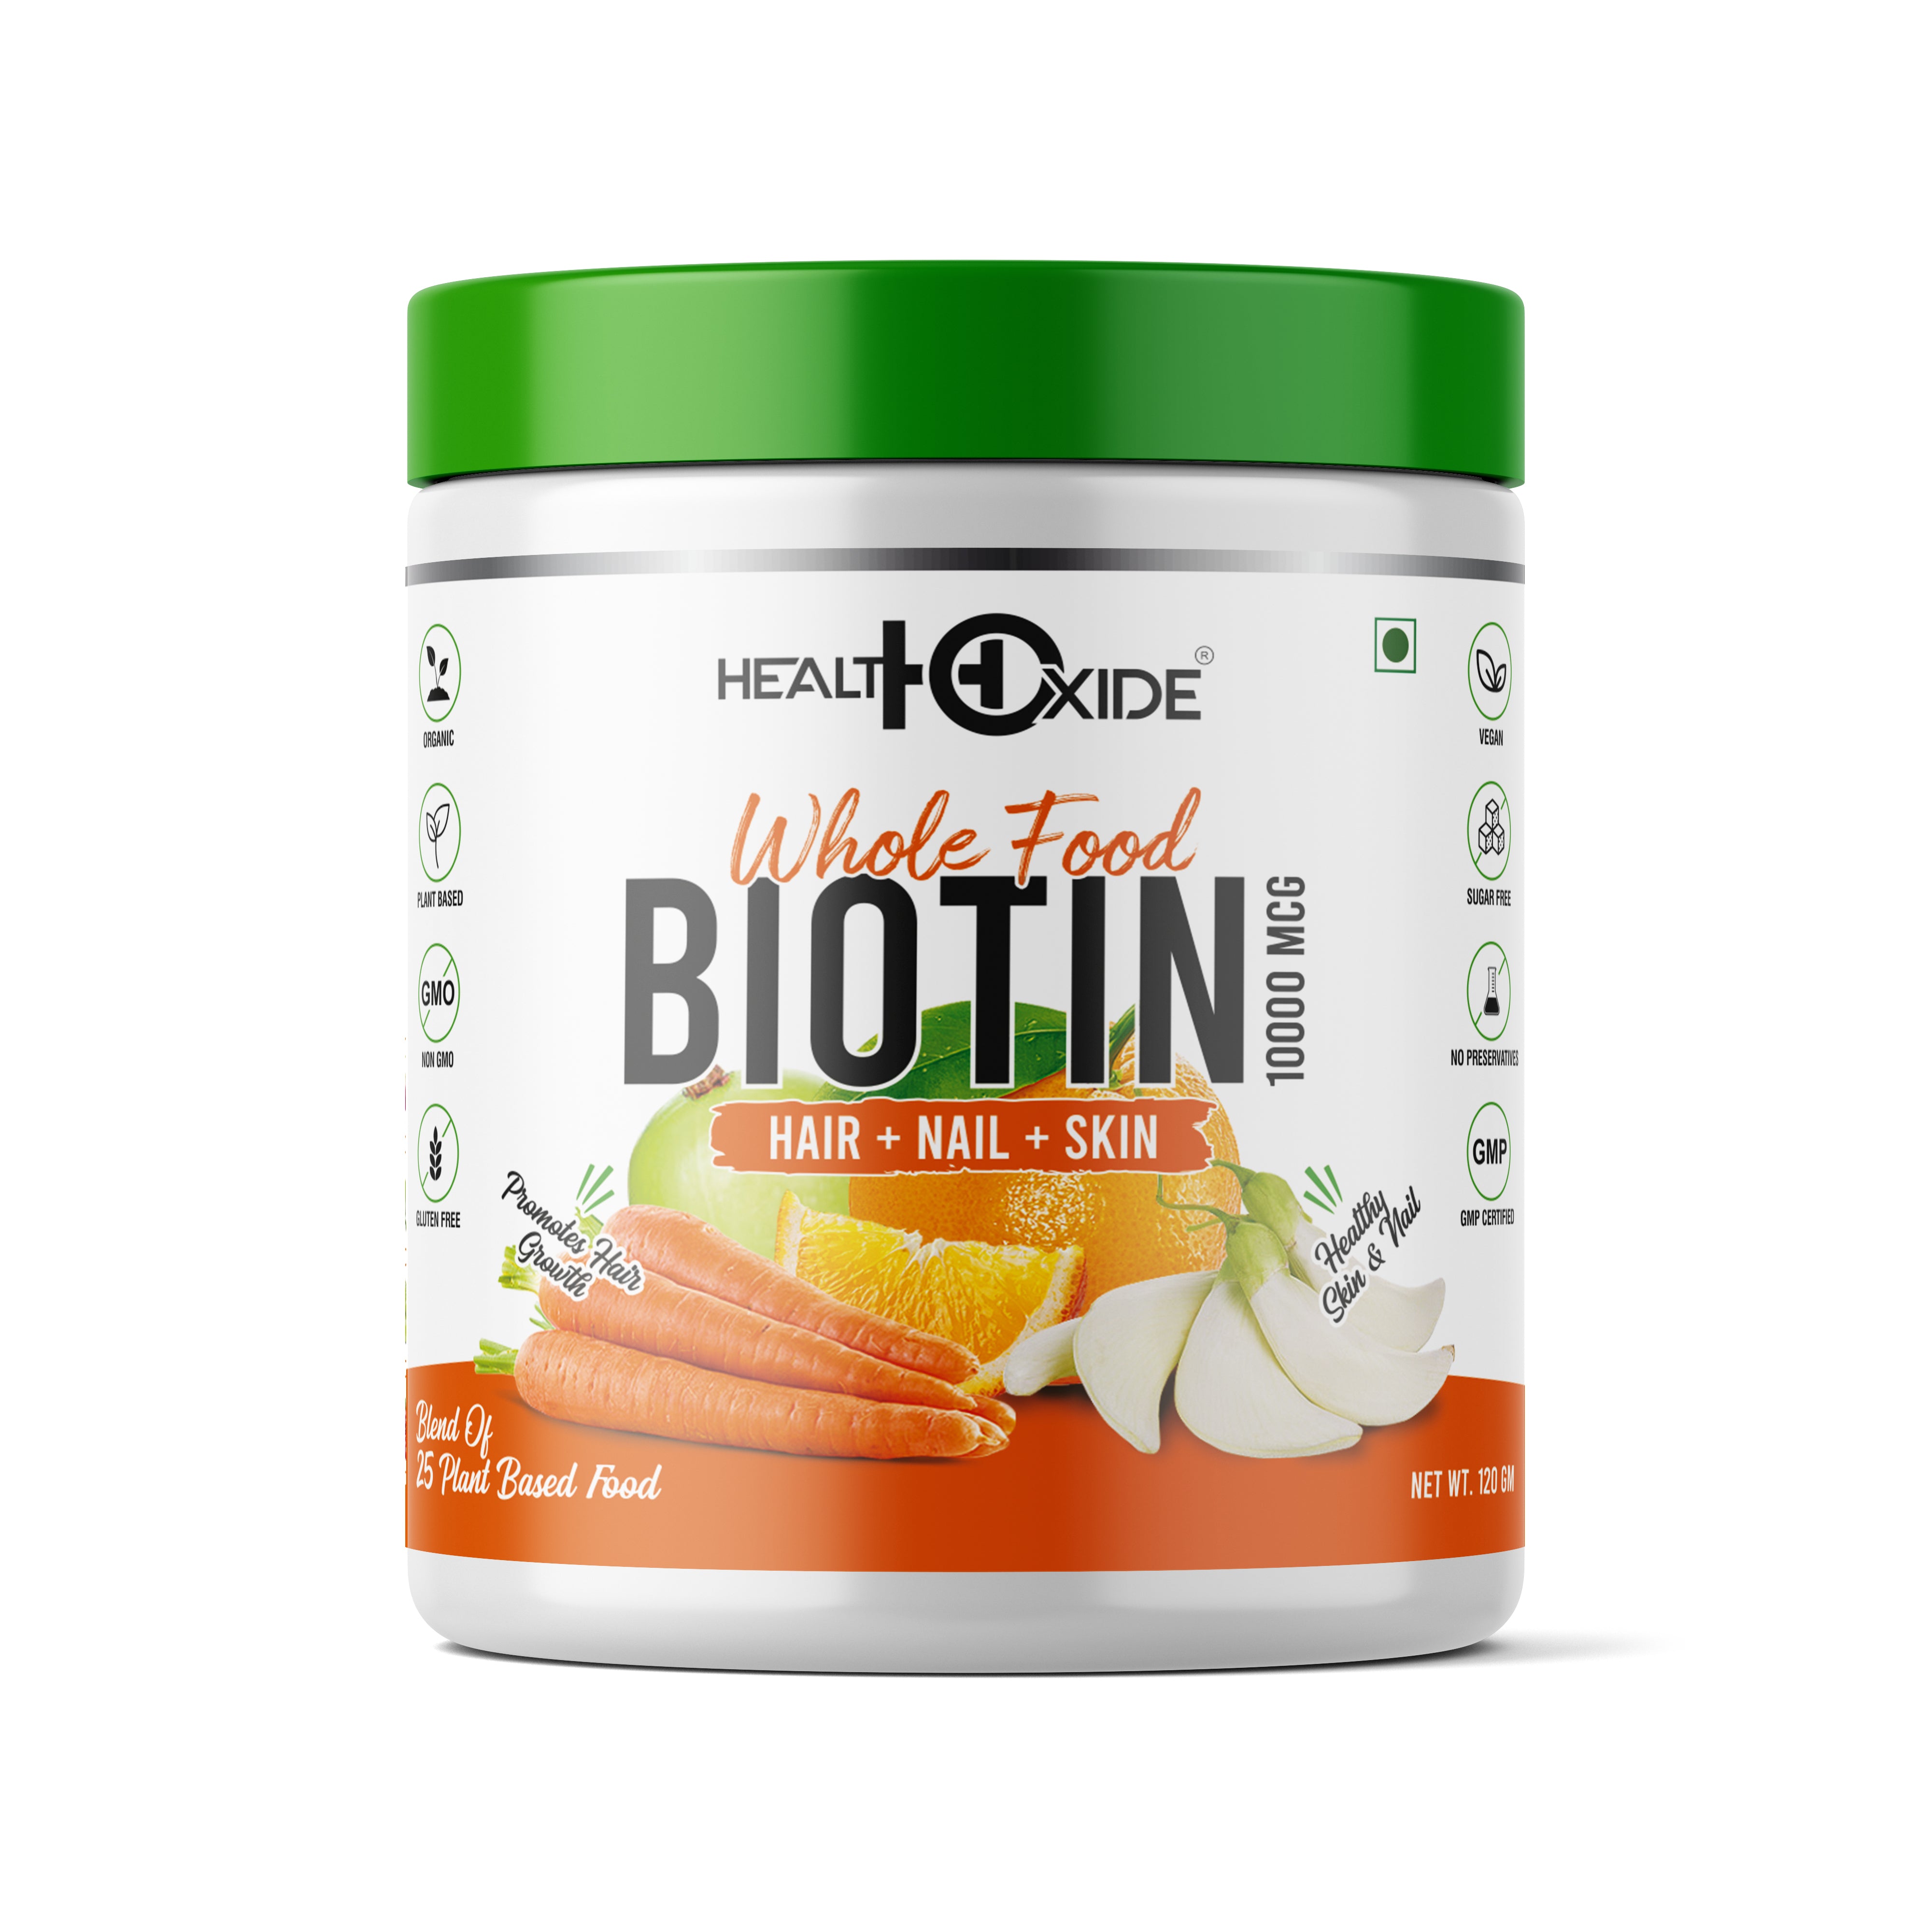 Healthoxide Whole Food Biotin for Healthy Hair, Nail, Skin,120g